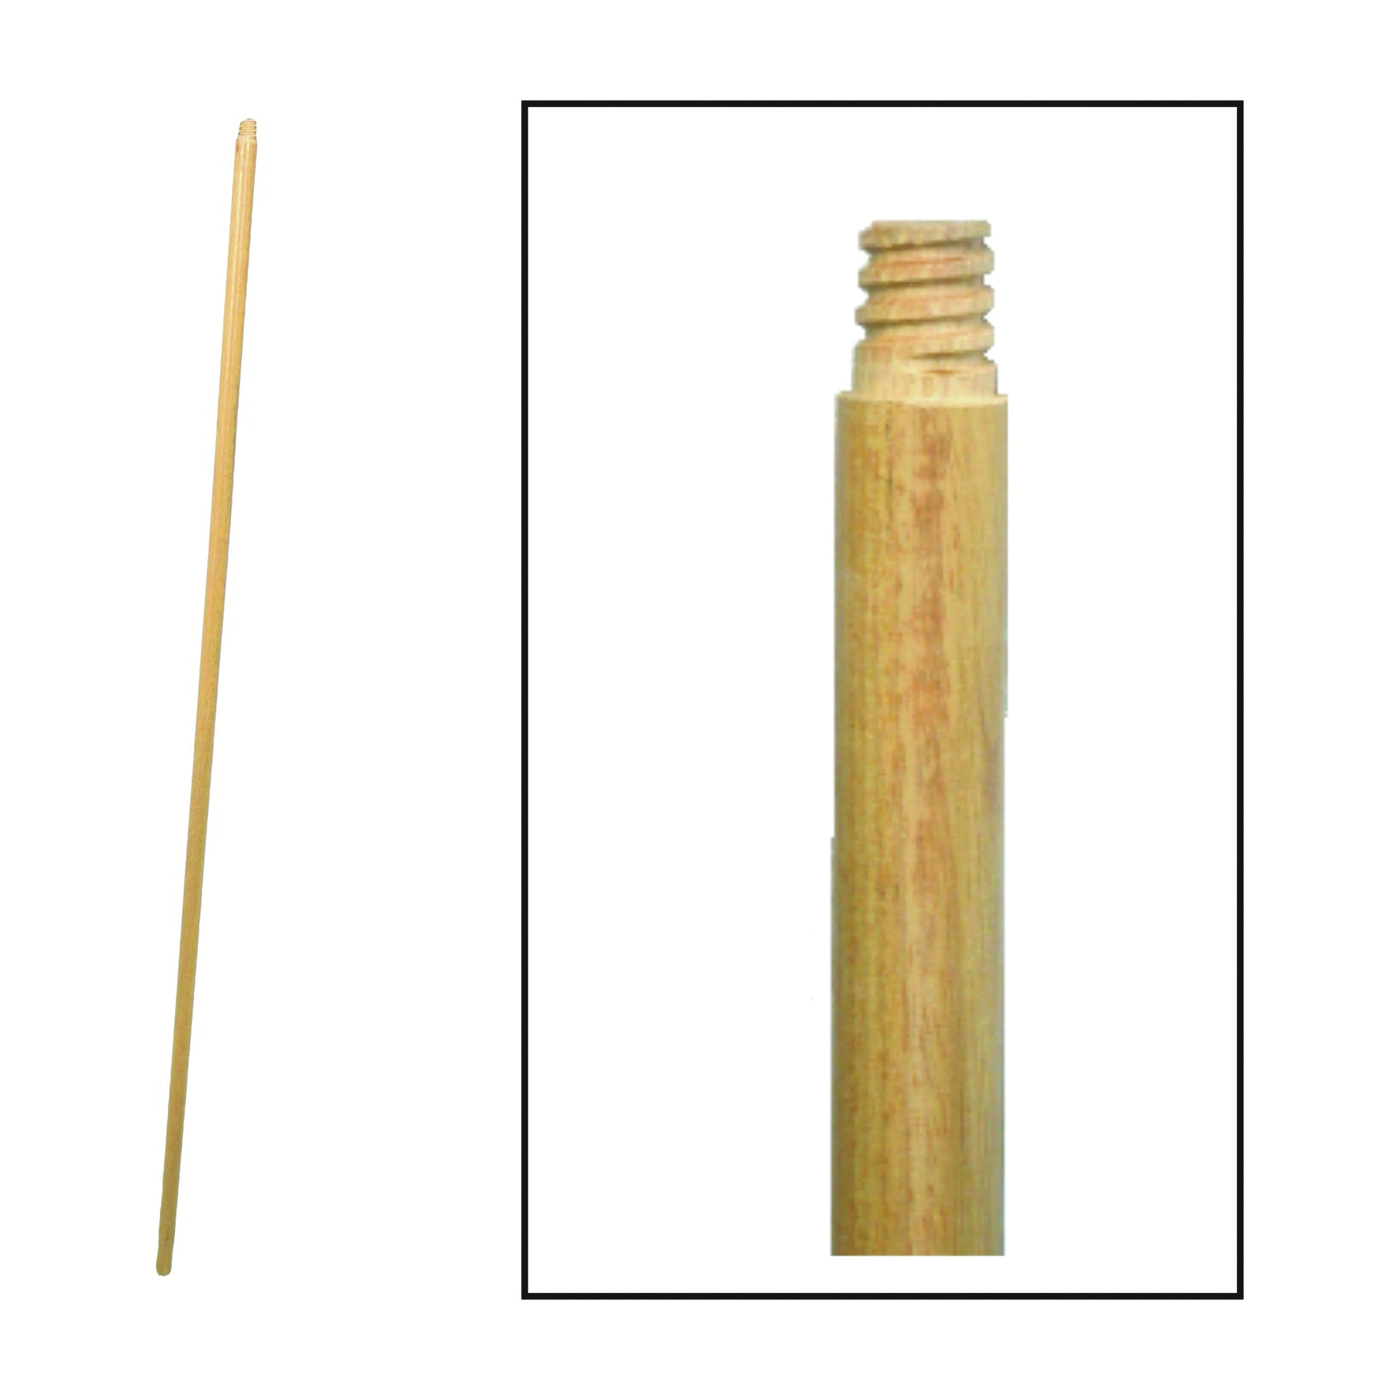 534-12 Broom Handle, 15/16 in Dia, 72 in L, Threaded, Hardwood